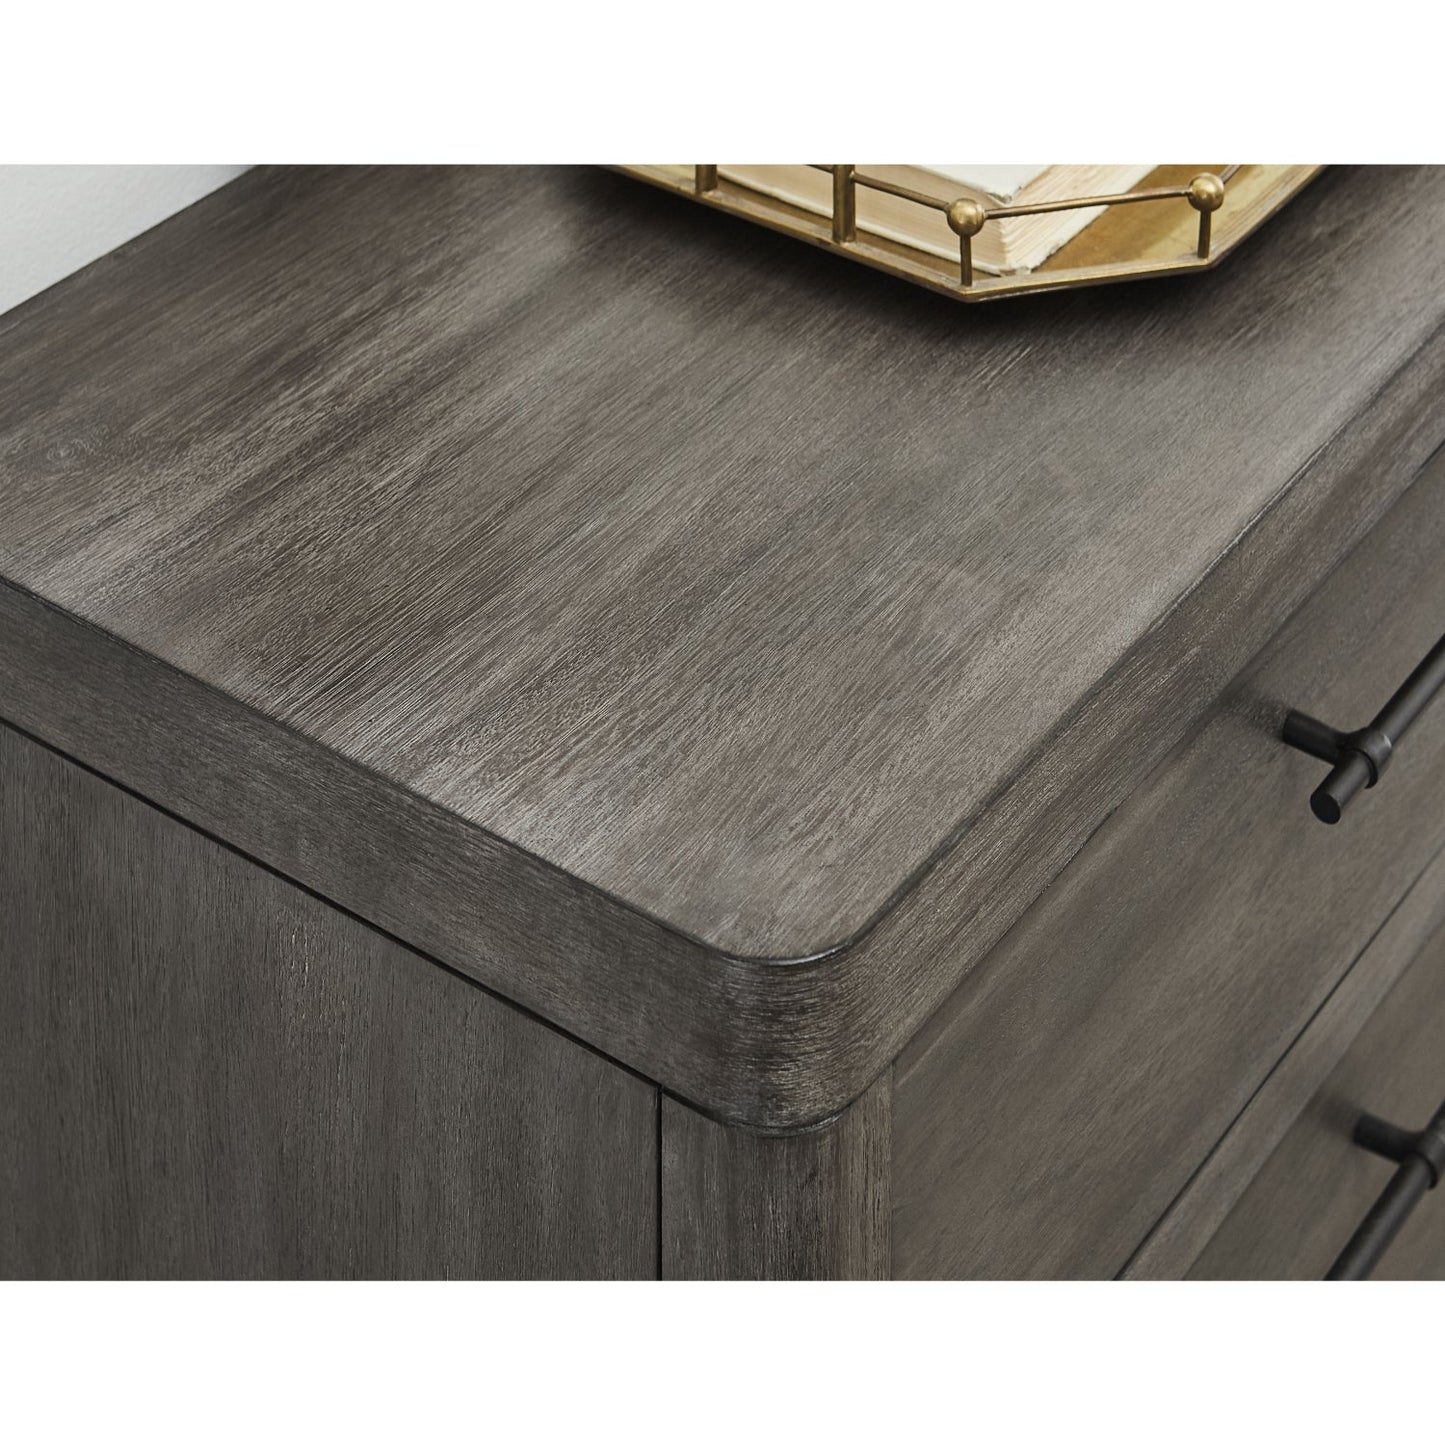 Modus Cicero Seven-Drawer Dresser in Rustic Latte